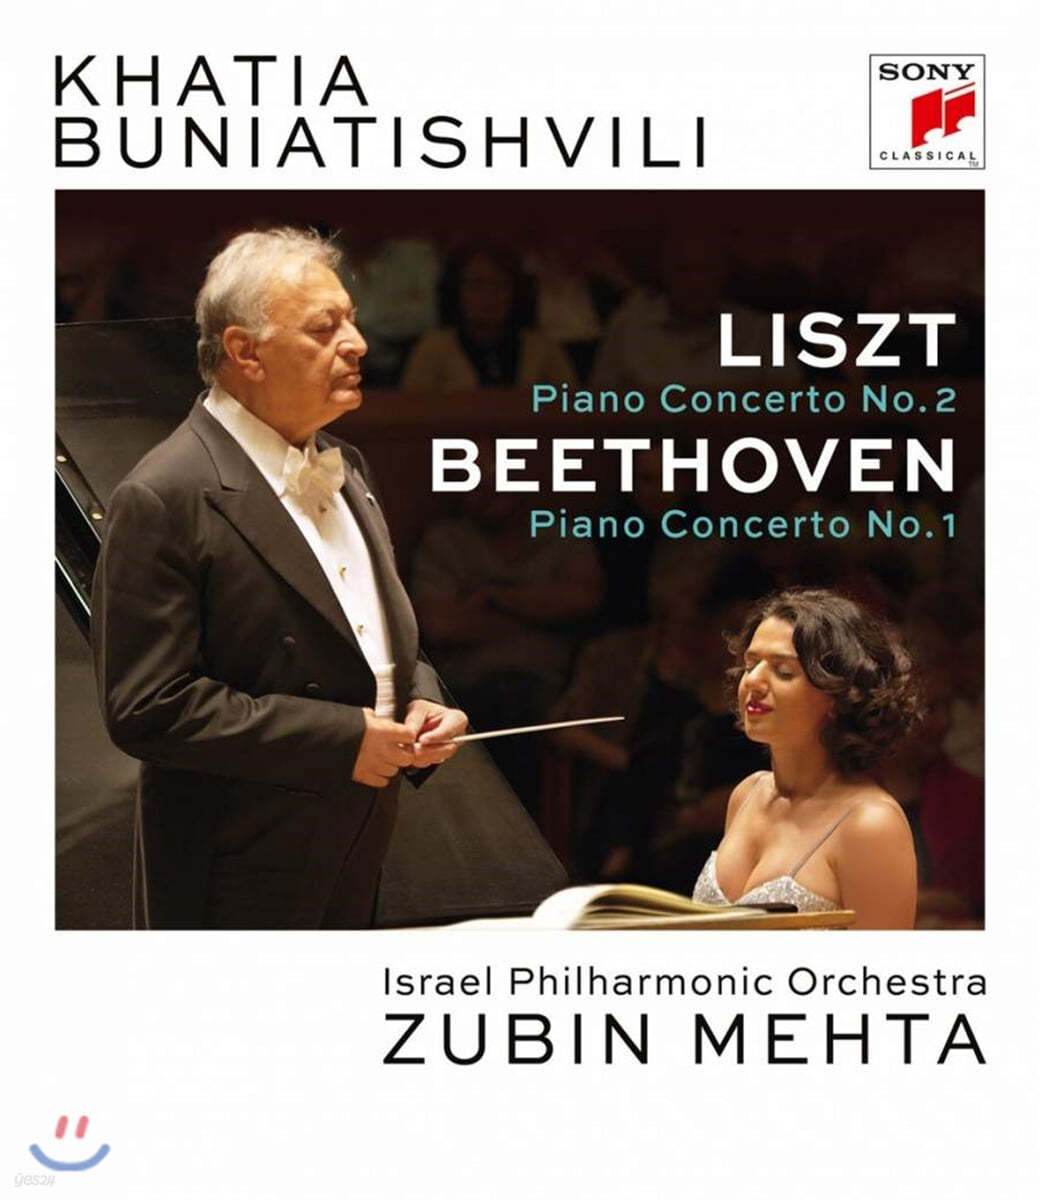 Khatia Buniatishvili / Zubin Mehta 리스트: 피아노 협주곡 2번 / 베토벤: 피아노 협주곡 1번 - 카티아 부니아티쉬빌리, 주빈 메타, 이스라엘 필하모닉